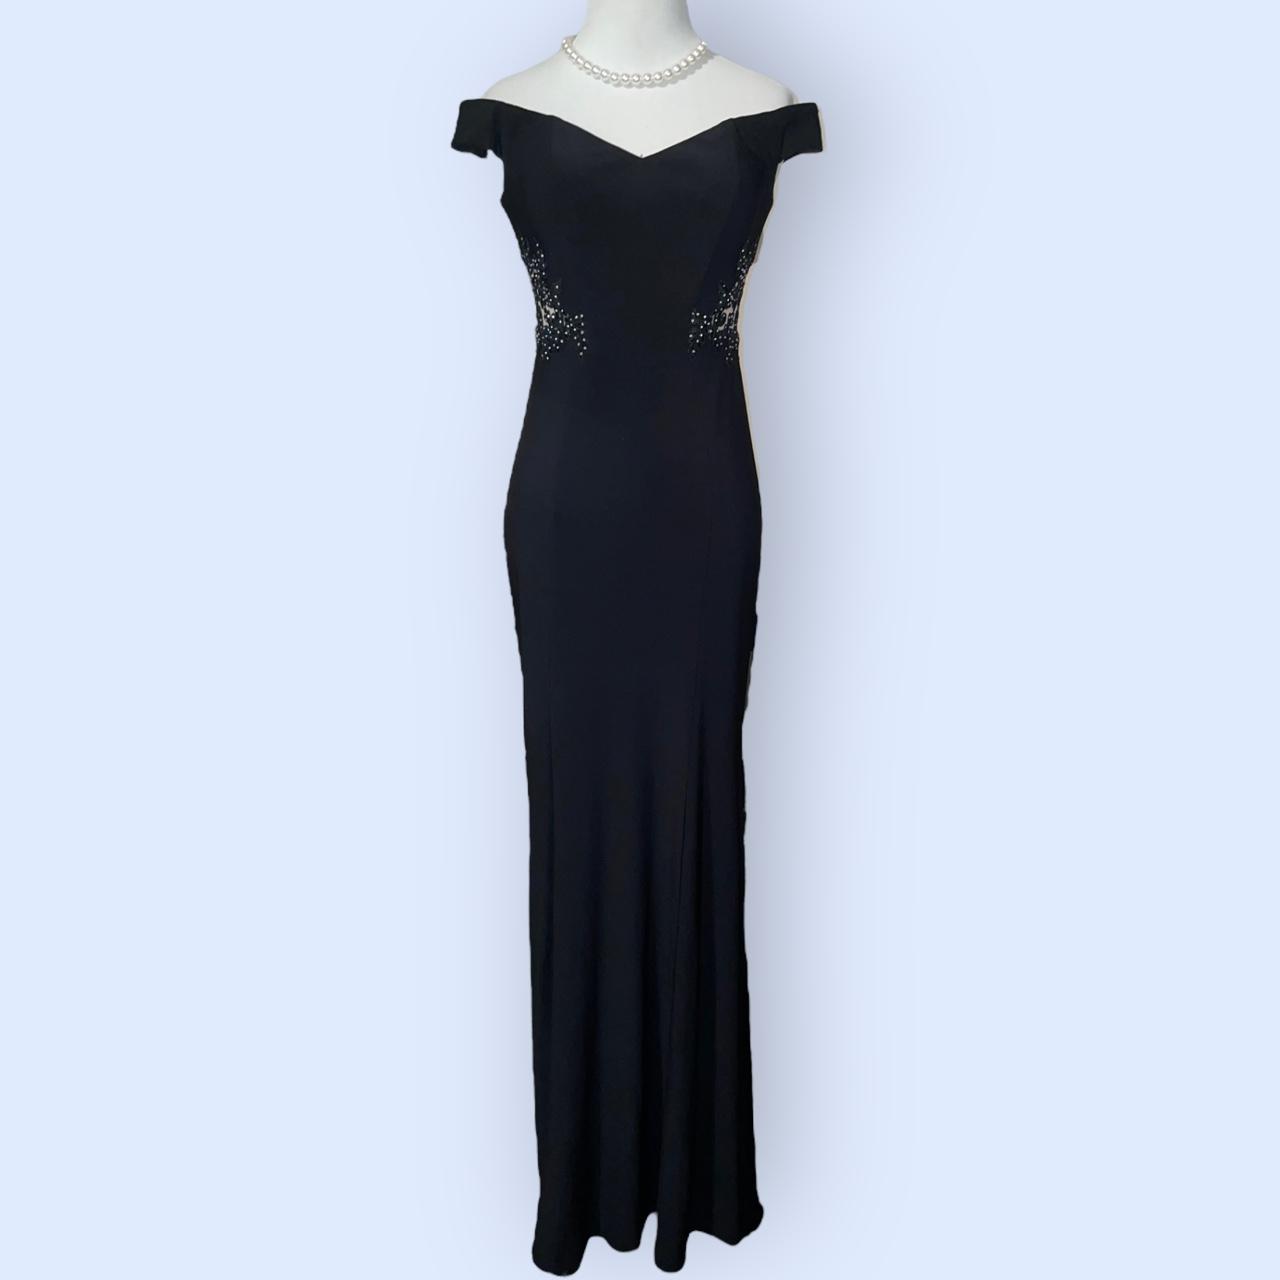 Product Image 1 - Blondie Nites Elegant Prom Dress

Description: